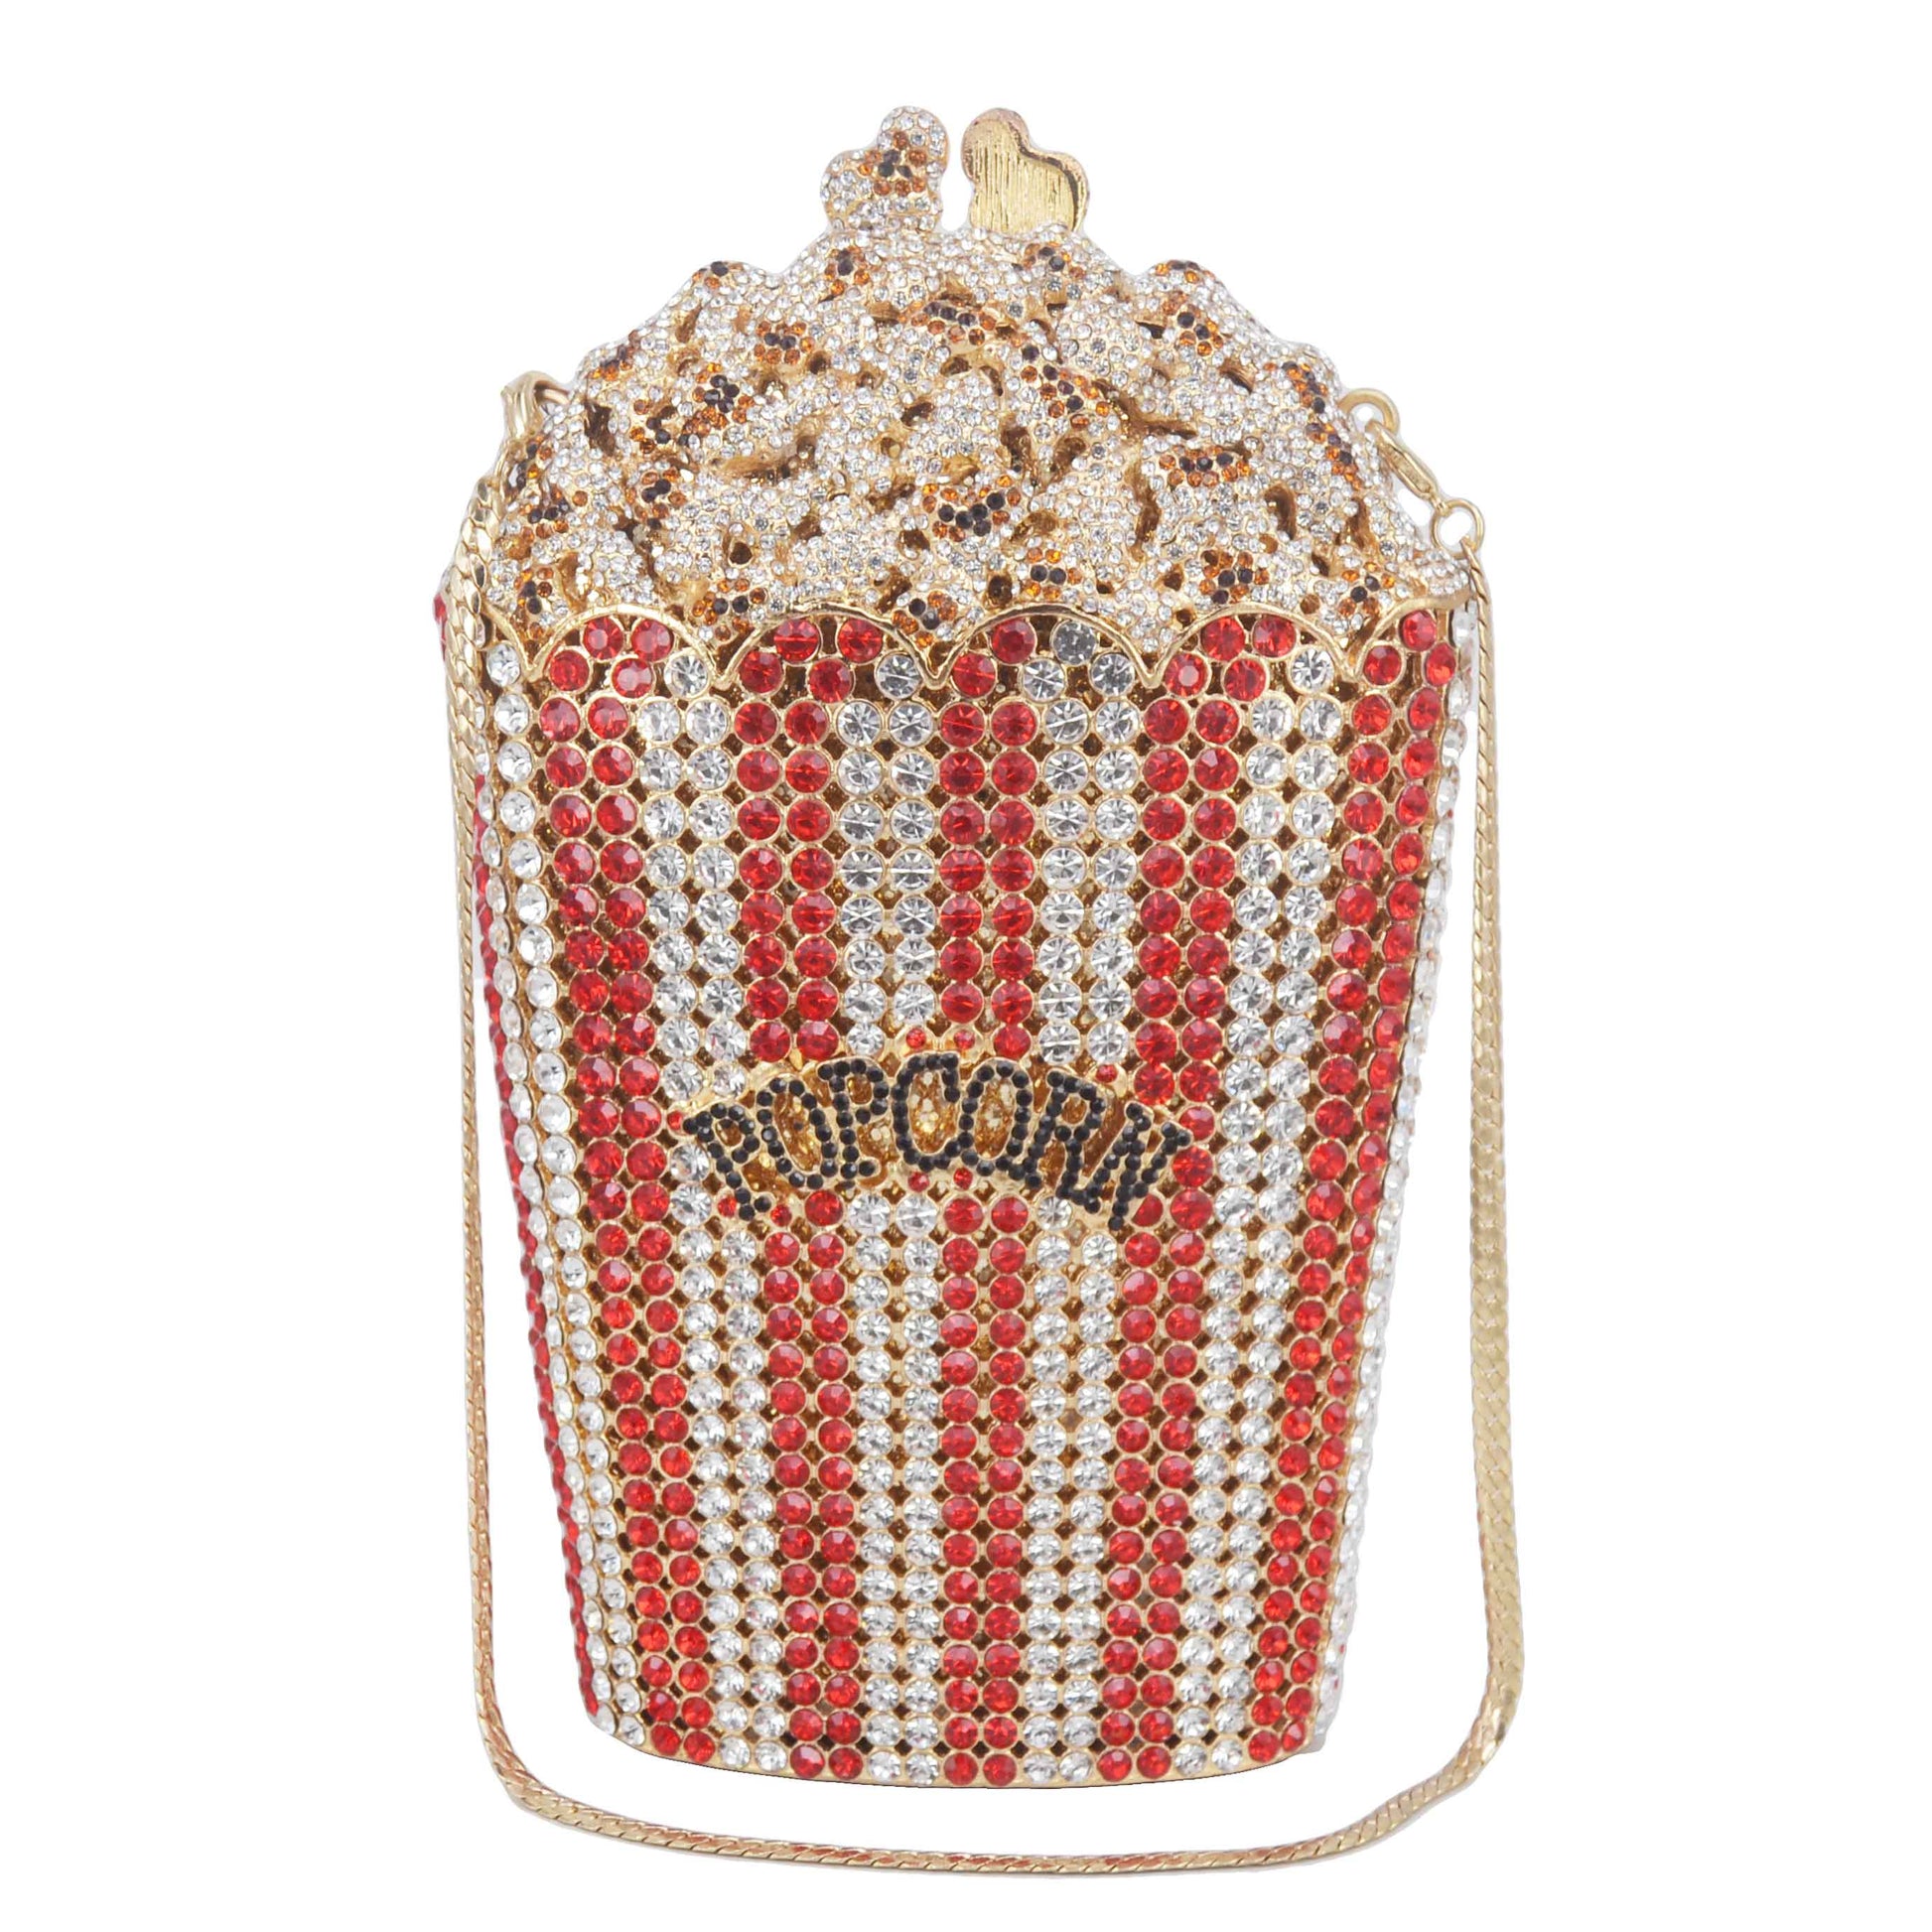 TEEK - Pizazz Popcorn Purse BAG theteekdotcom   